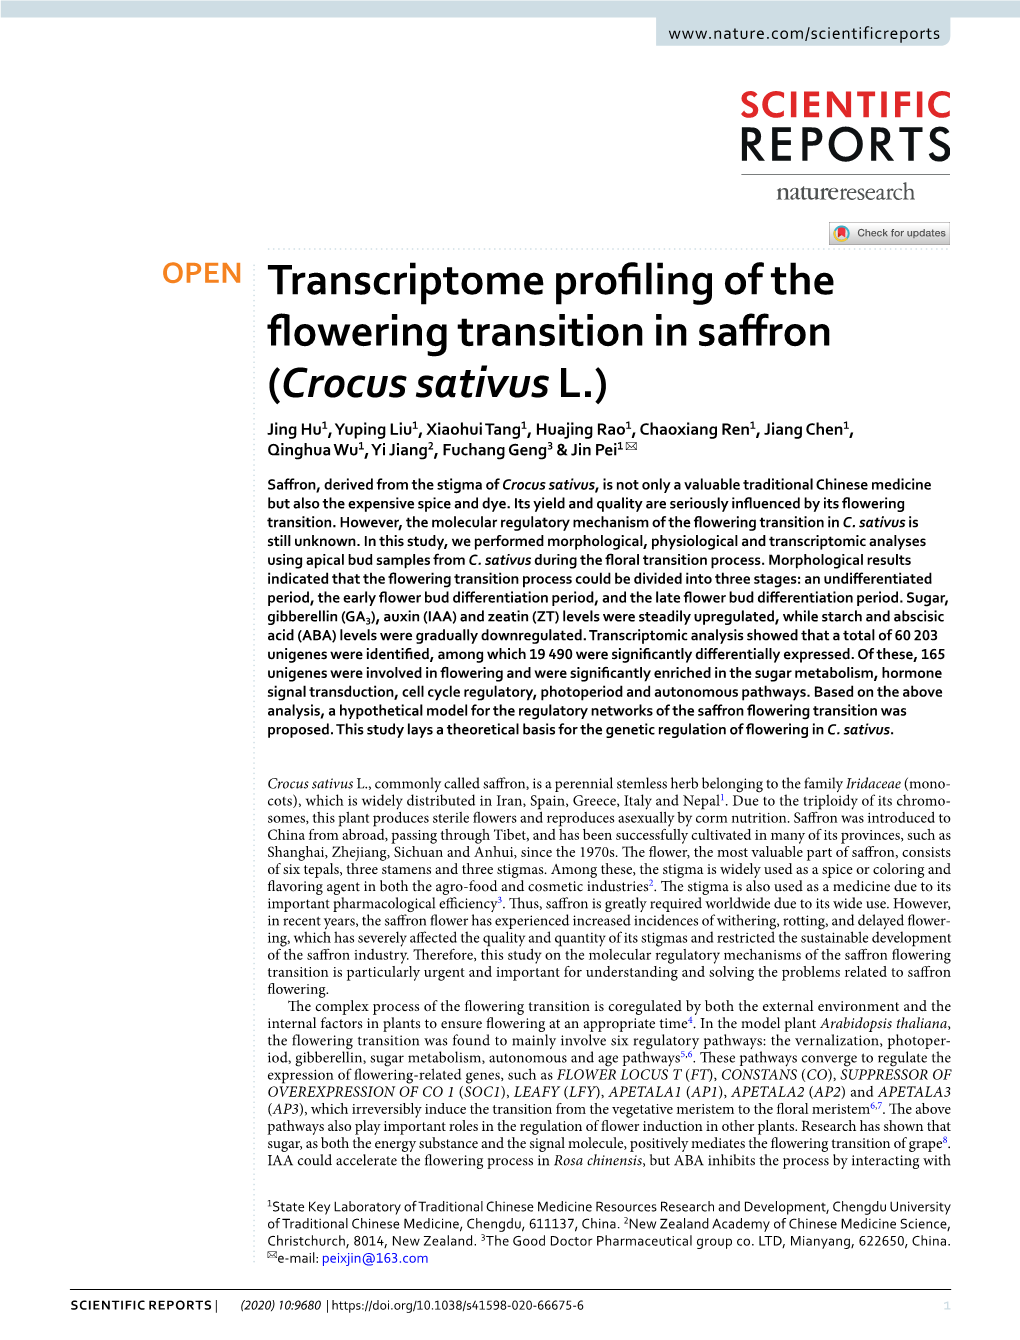 Transcriptome Profiling of the Flowering Transition in Saffron